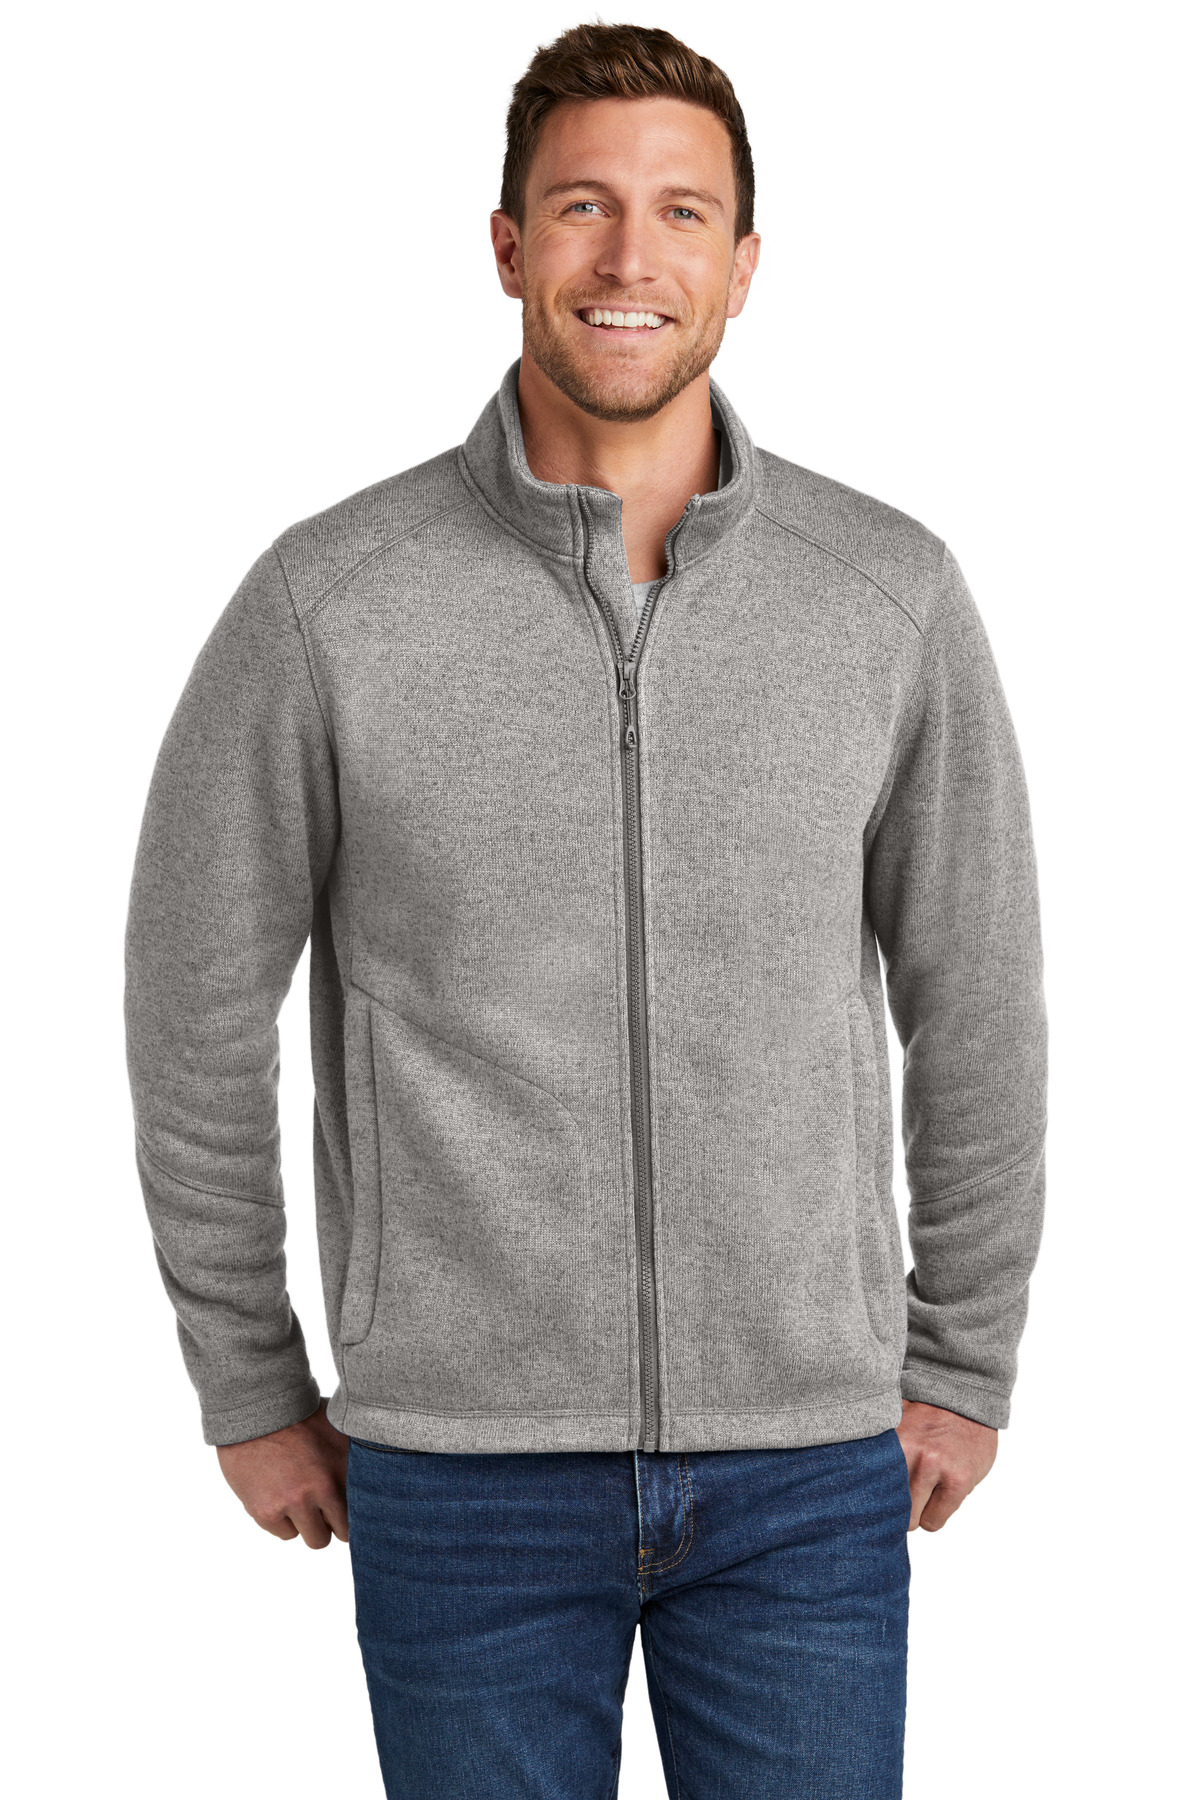 Port Authority Arc Sweater Fleece Jacket-Port Authority